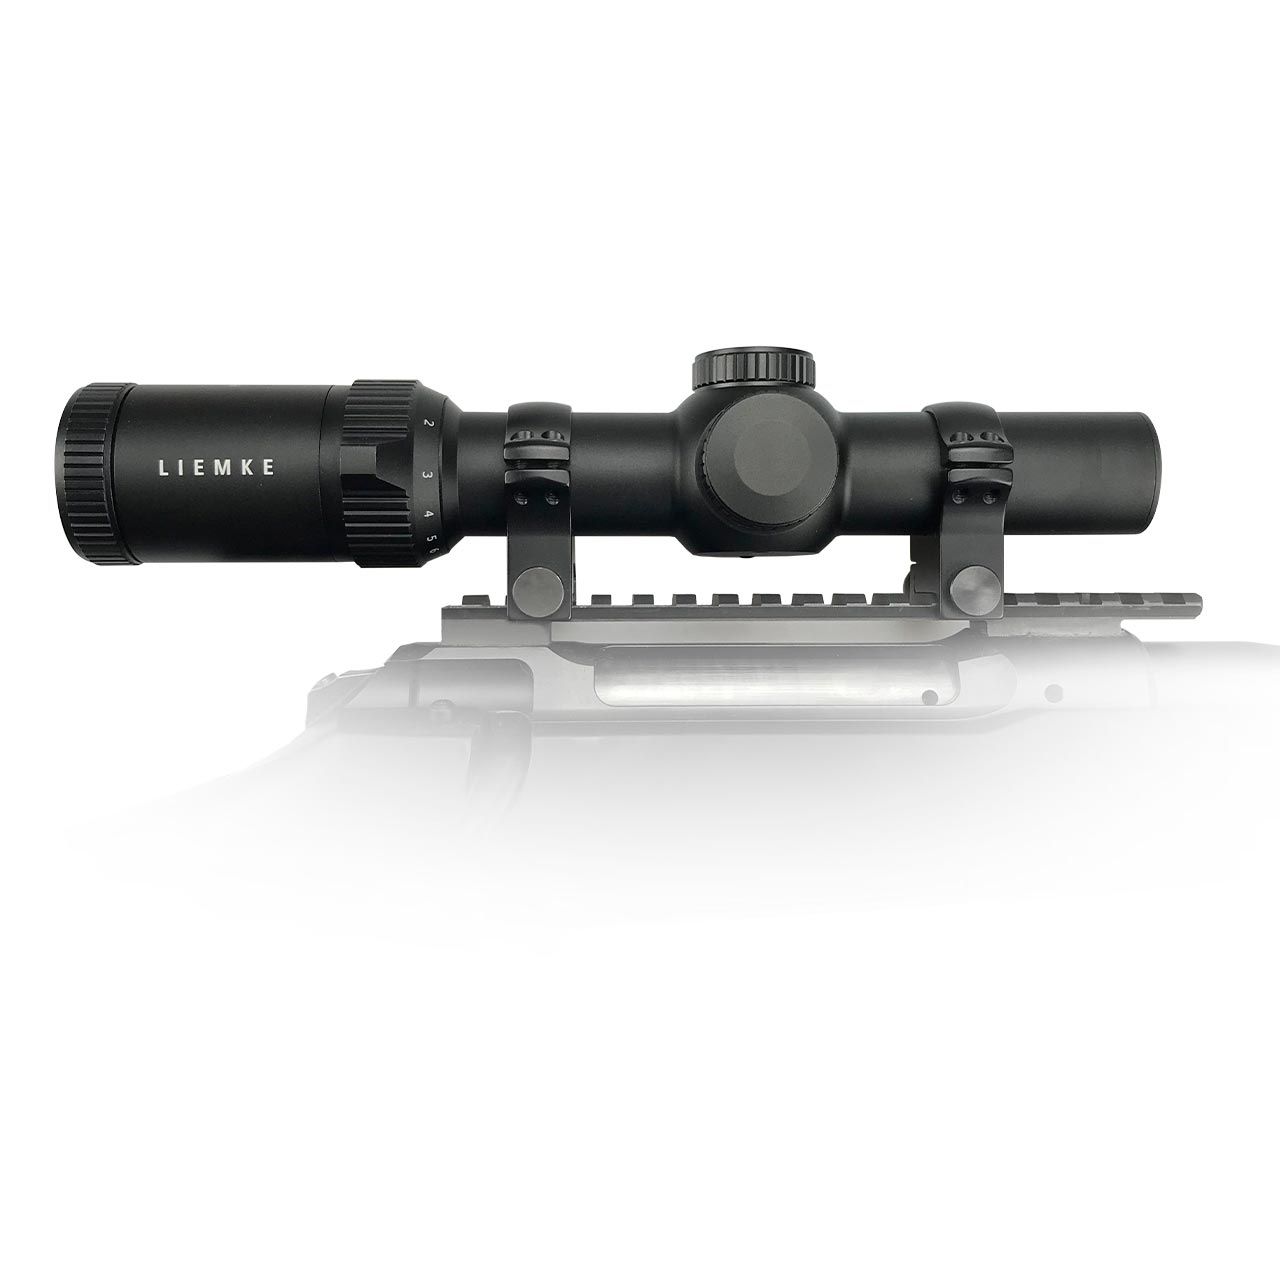 ZF 1-8x24 Riflescope